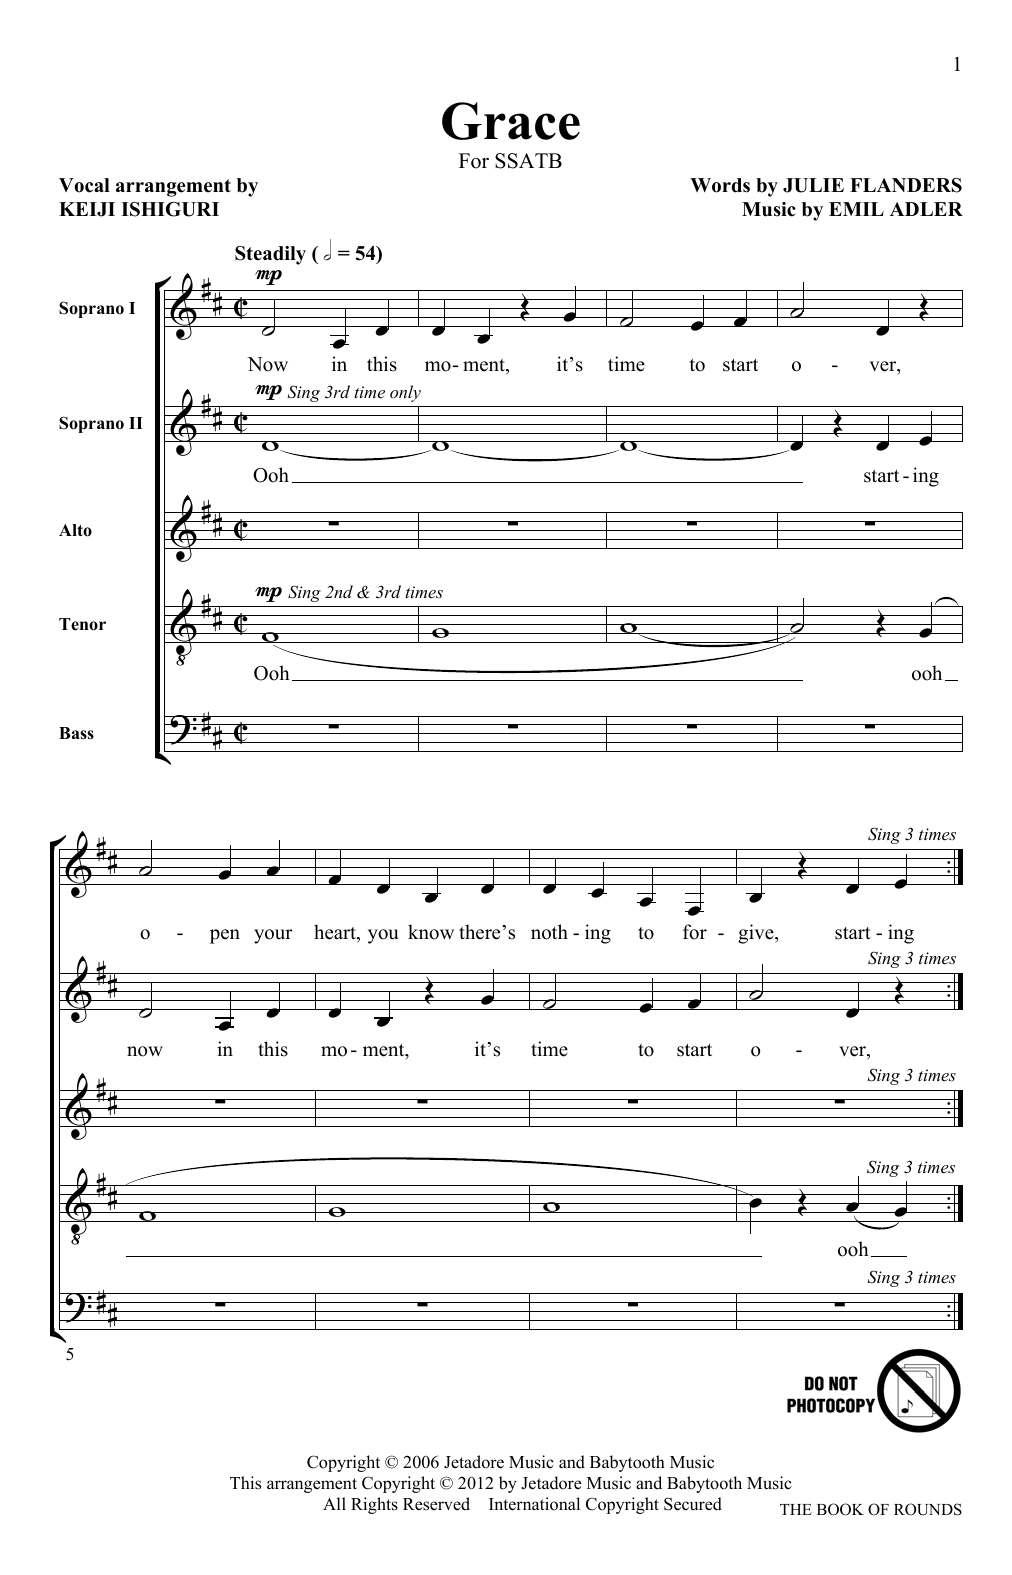 Keiji Ishiguri Grace Sheet Music Notes & Chords for SATB - Download or Print PDF